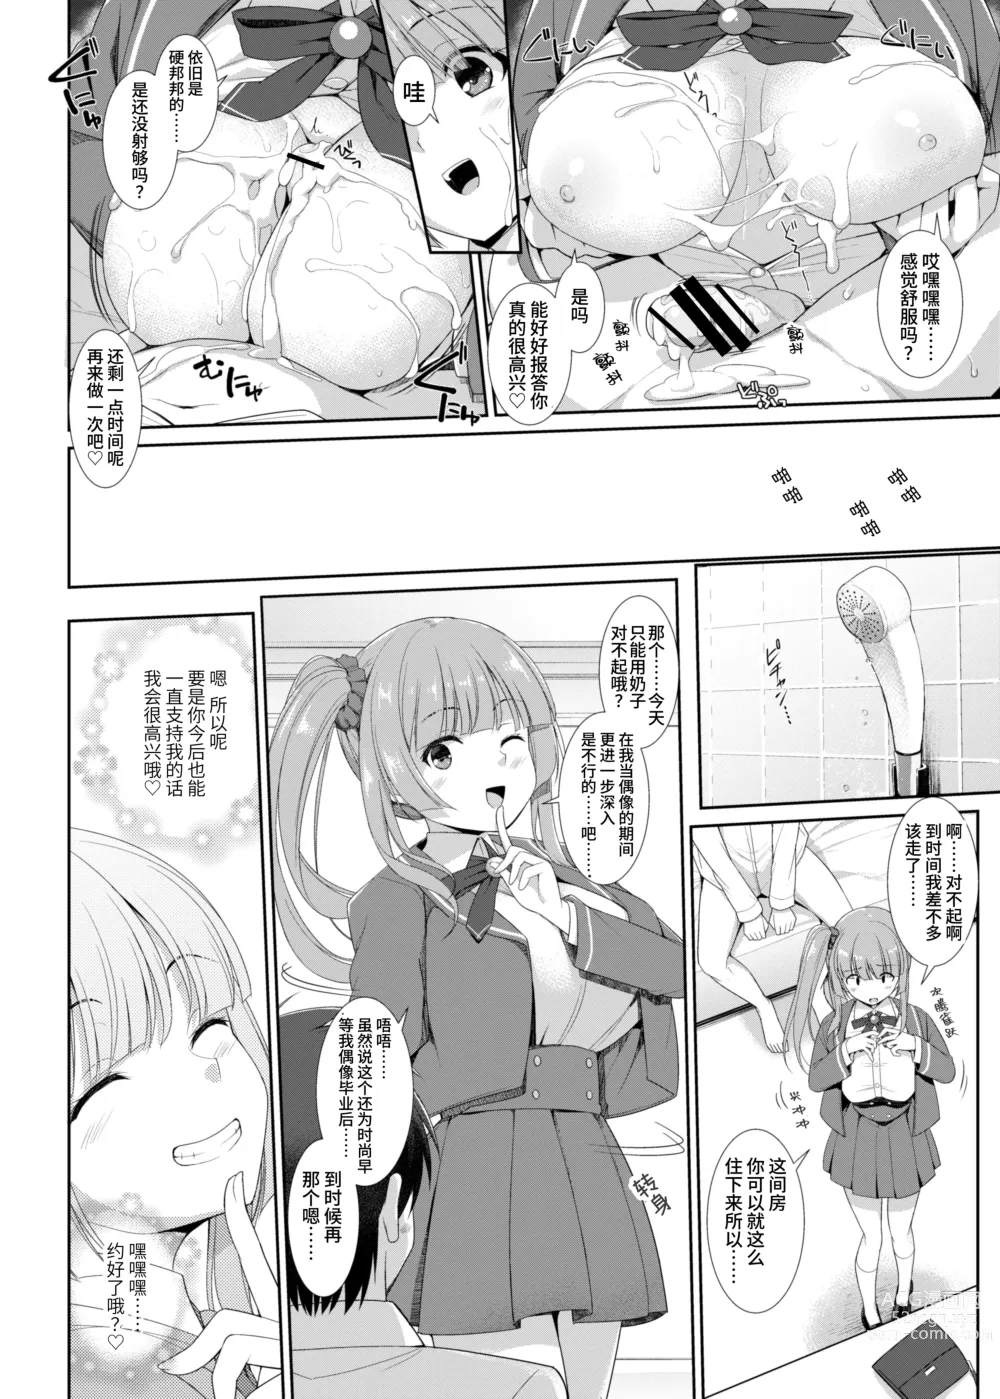 Page 12 of manga 【简体中文版】乳交专业杂志《绝对乳夹射》Vol.4